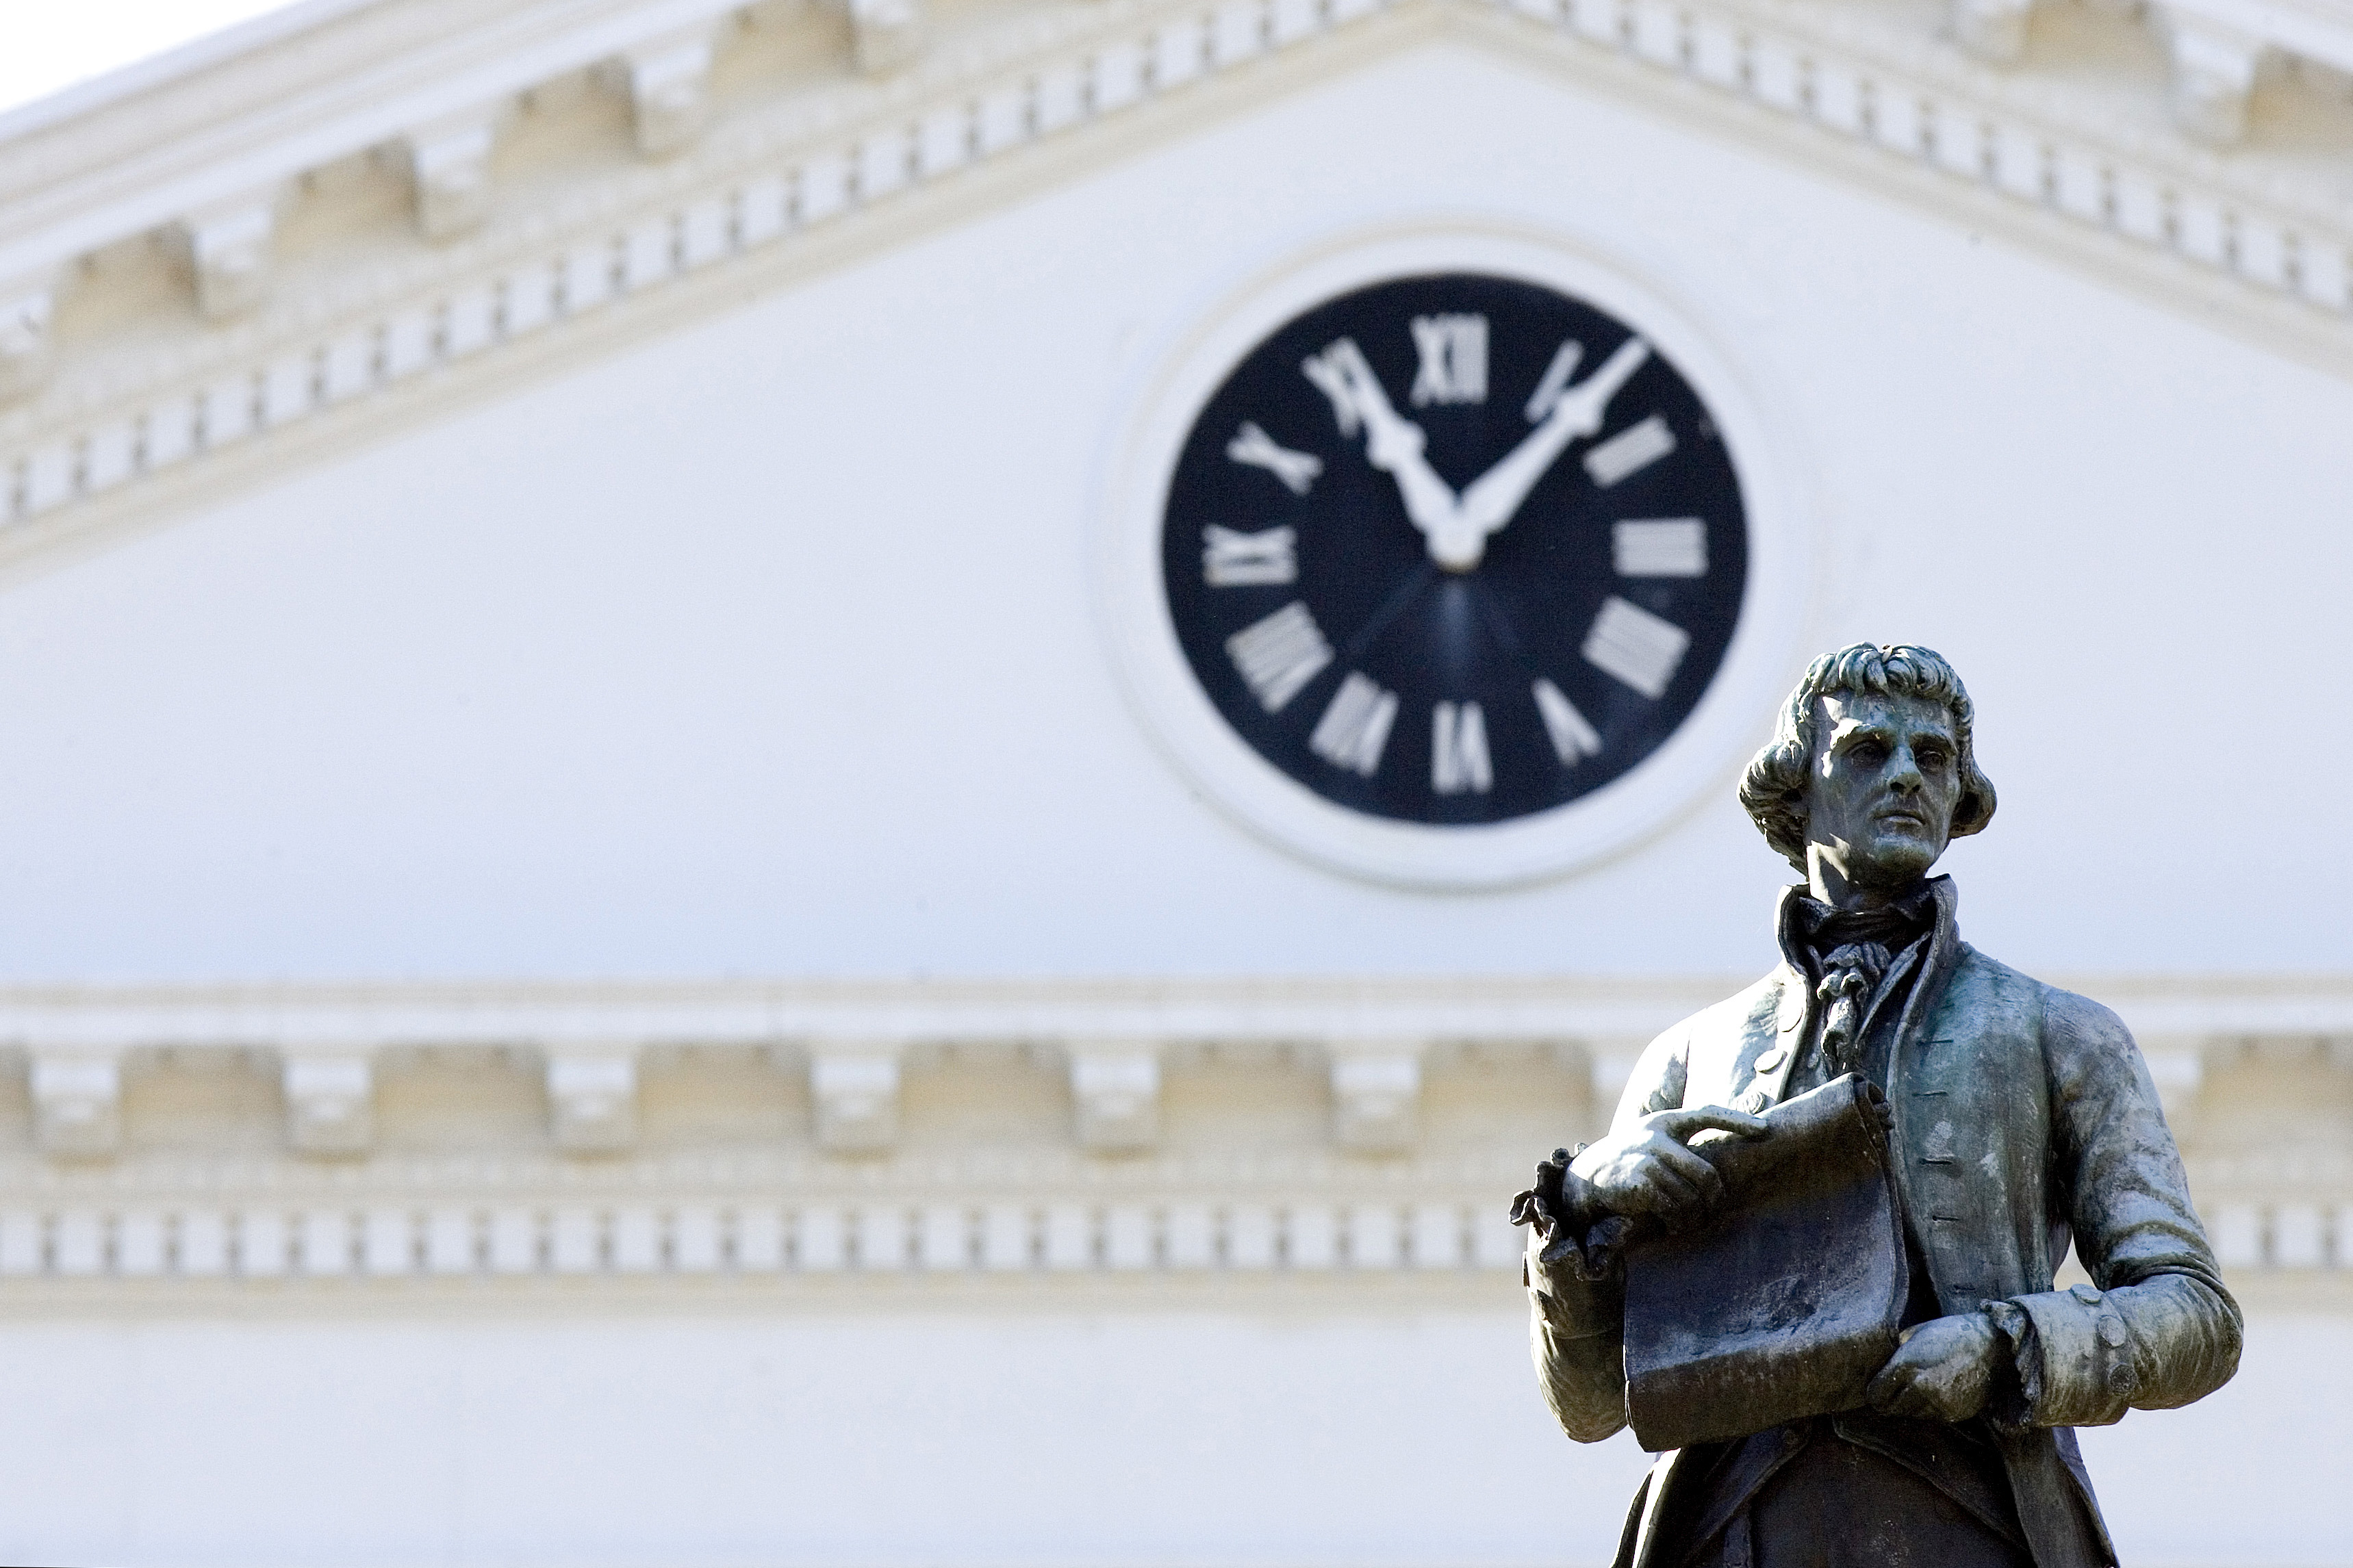 Thomas Jefferson statue in front of the Rotunda clock